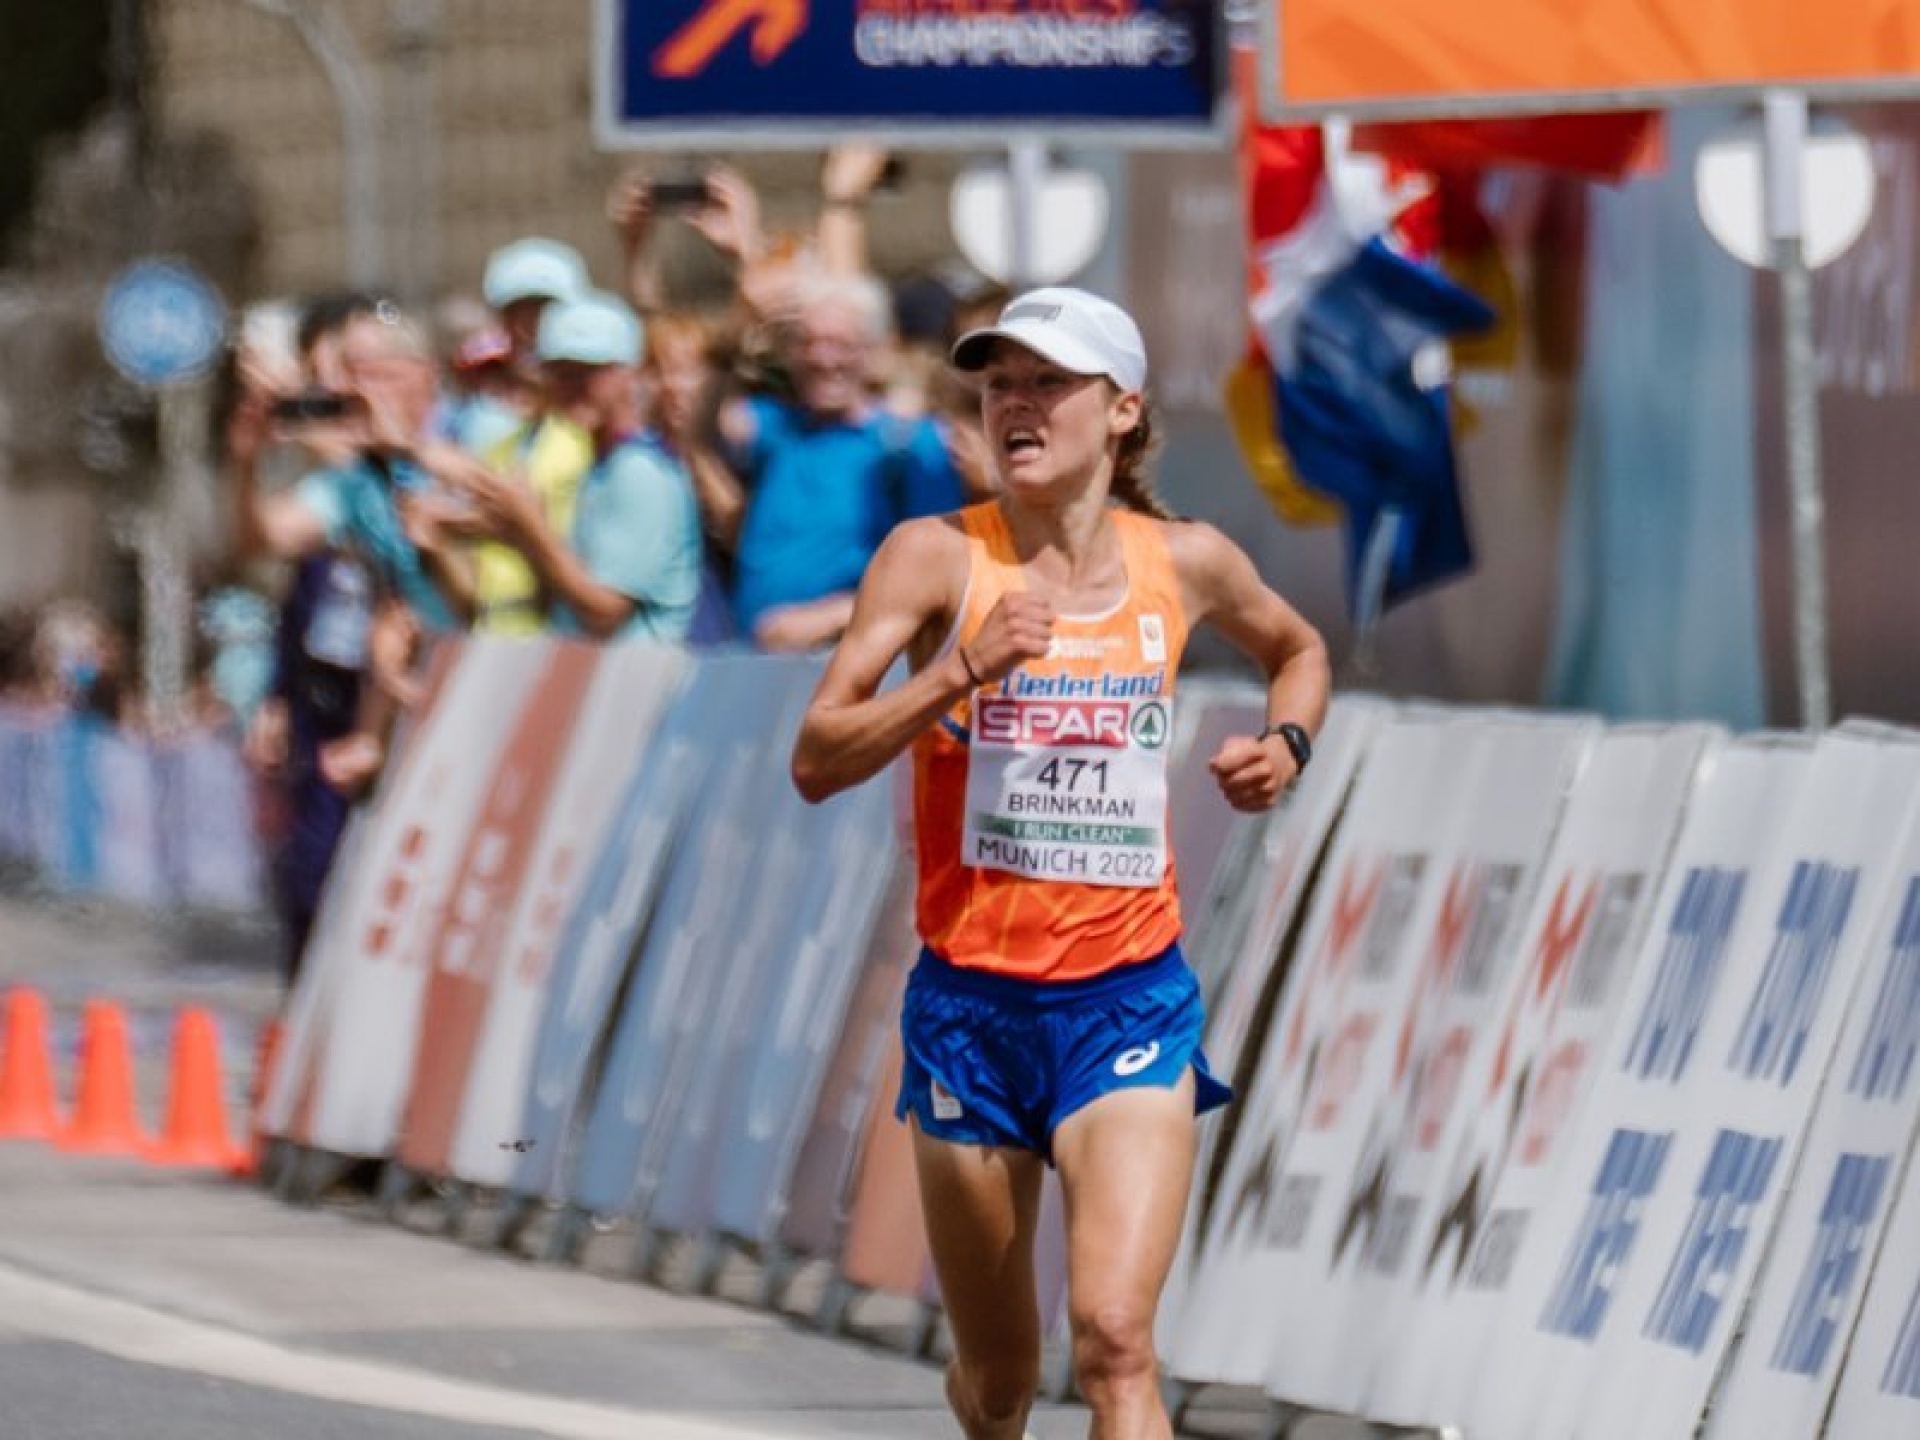 Nienke earns valiant European marathon bronze medal